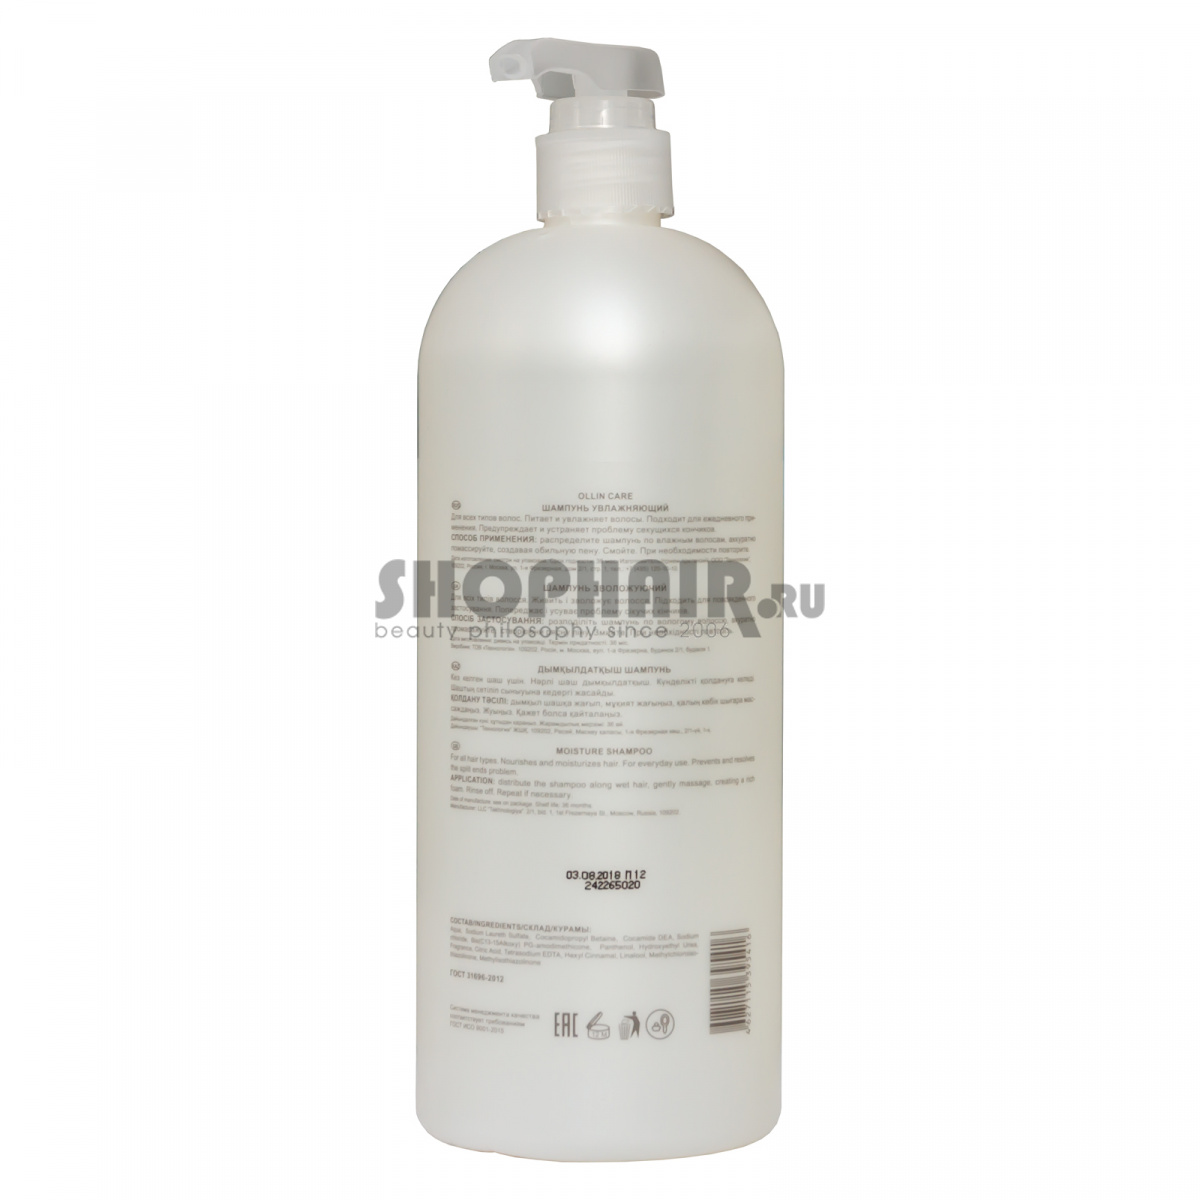 Ollin Professional Care Moisture Shampoo - Шампунь увлажняющий 1000 мл Ollin Professional (Россия) купить по цене 753 руб.